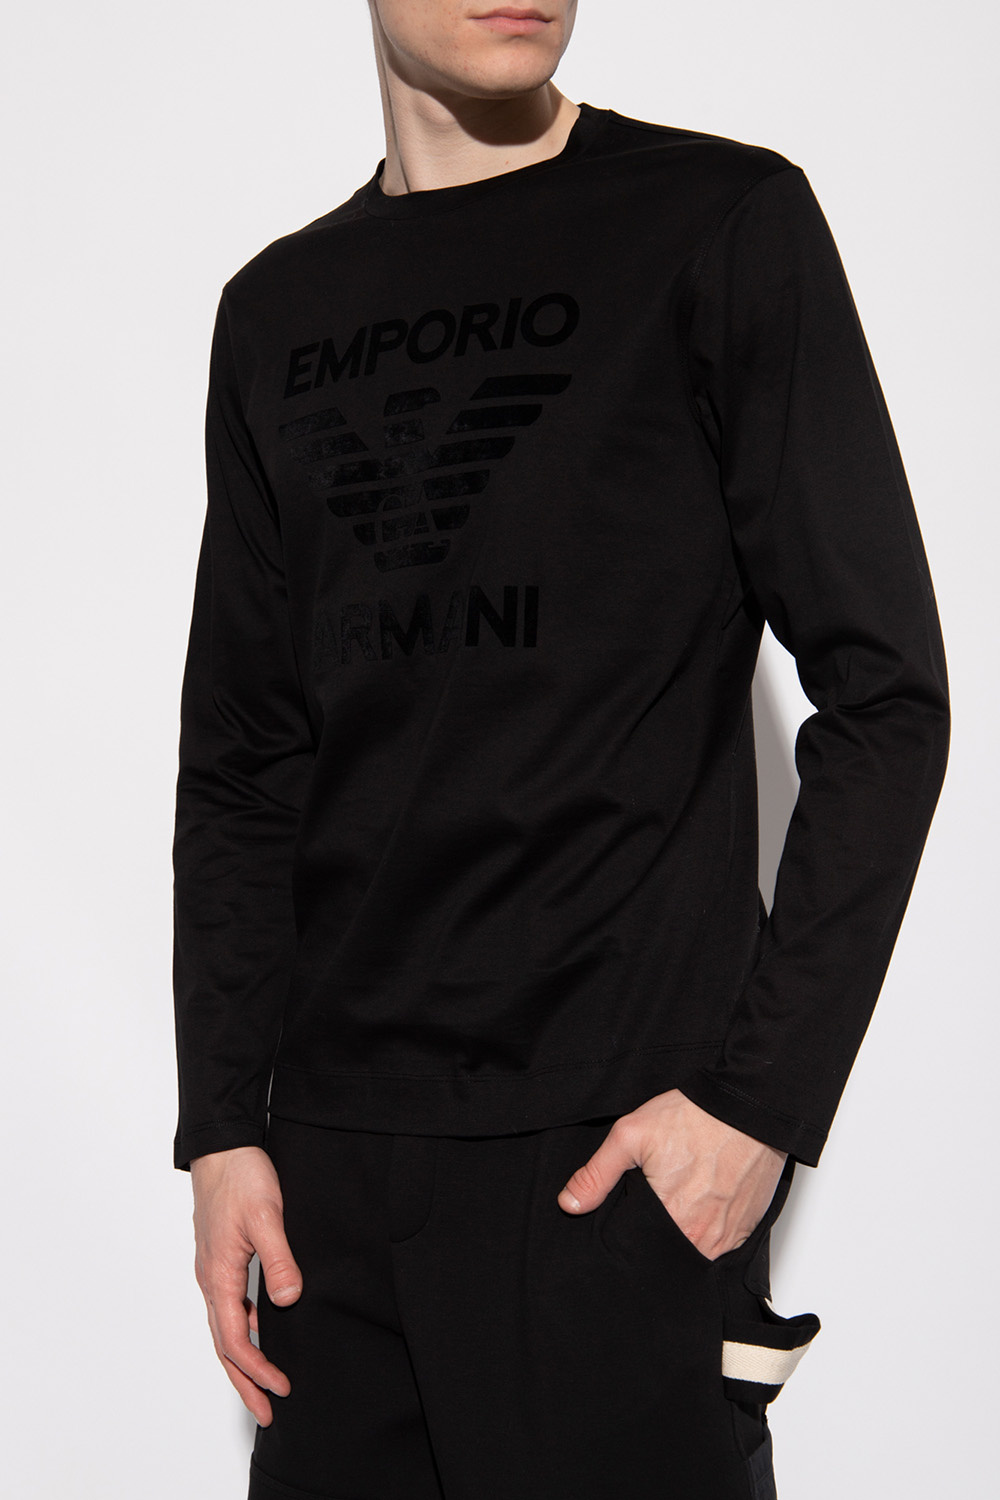 Emporio Armani Long-sleeved T-shirt